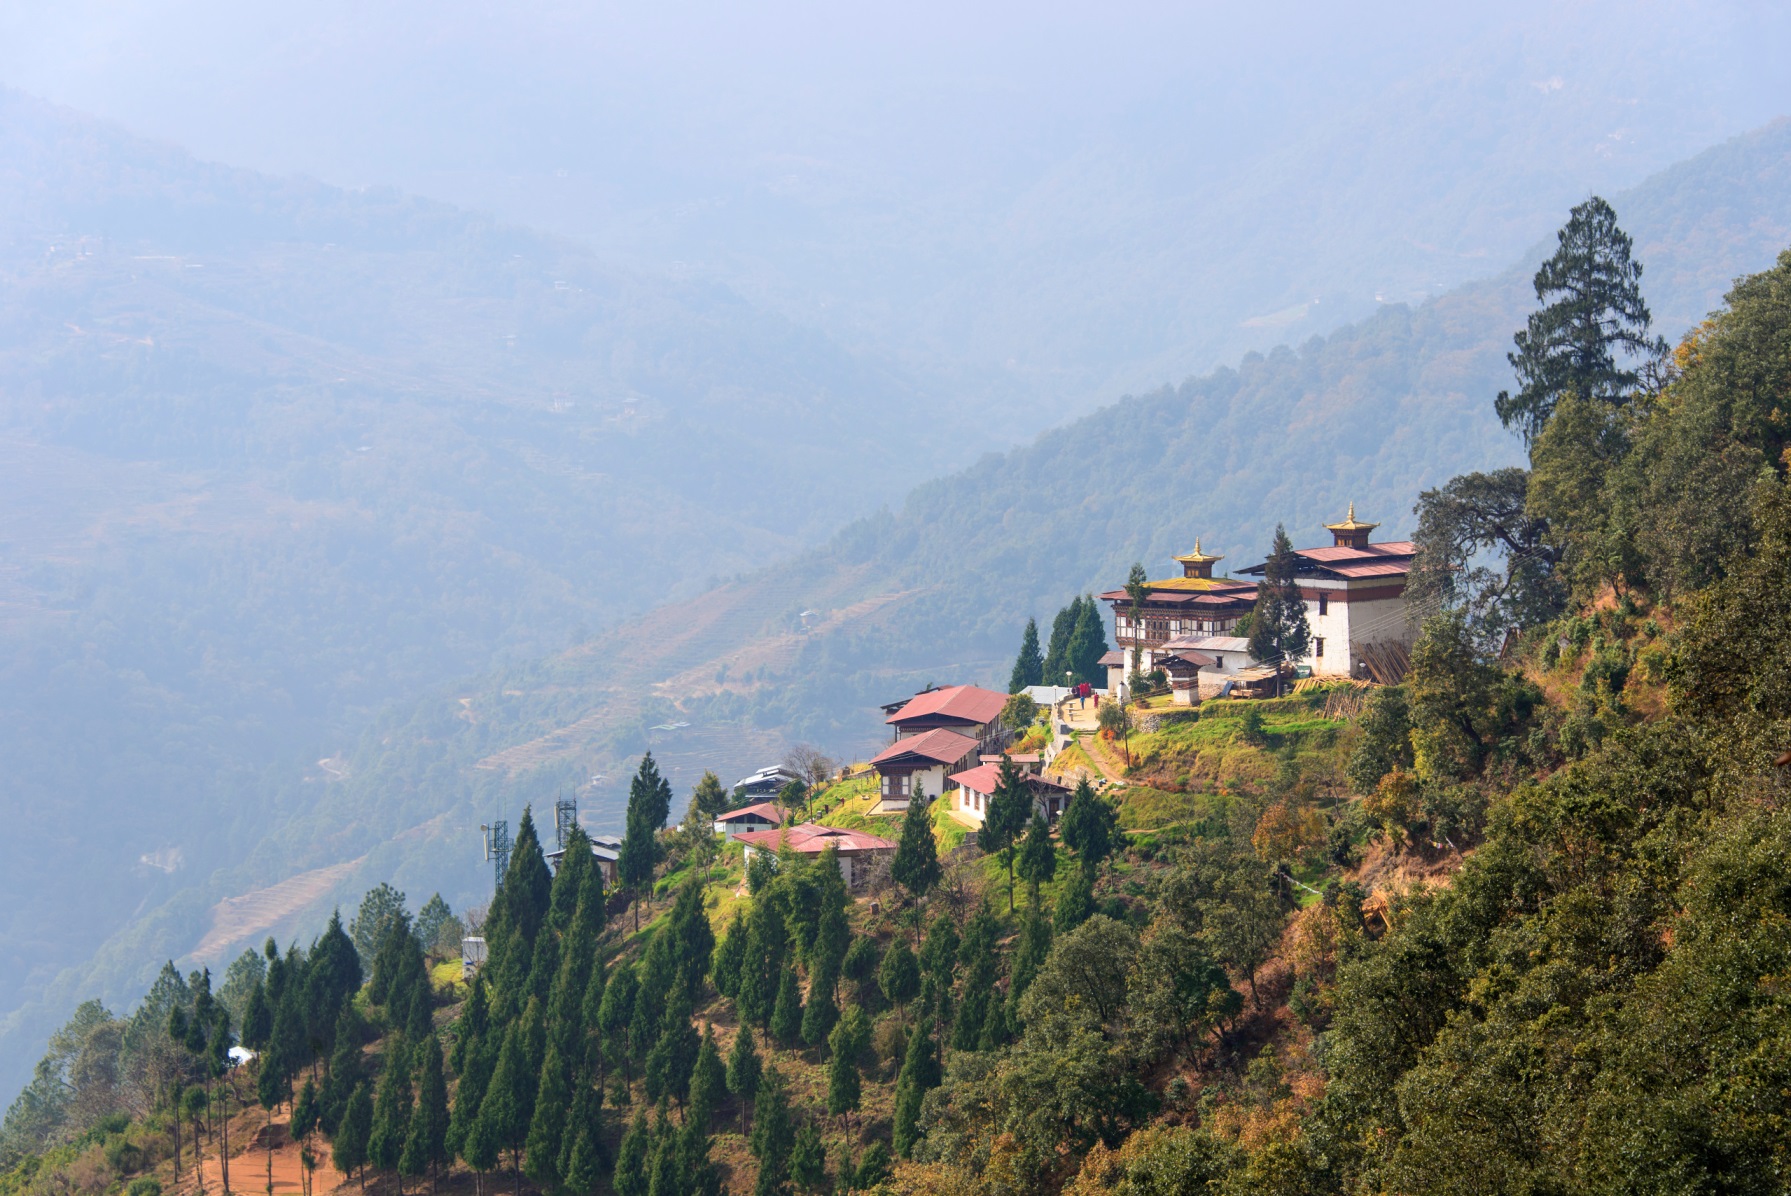 The hillside of Amankora Punakha, Bhutan